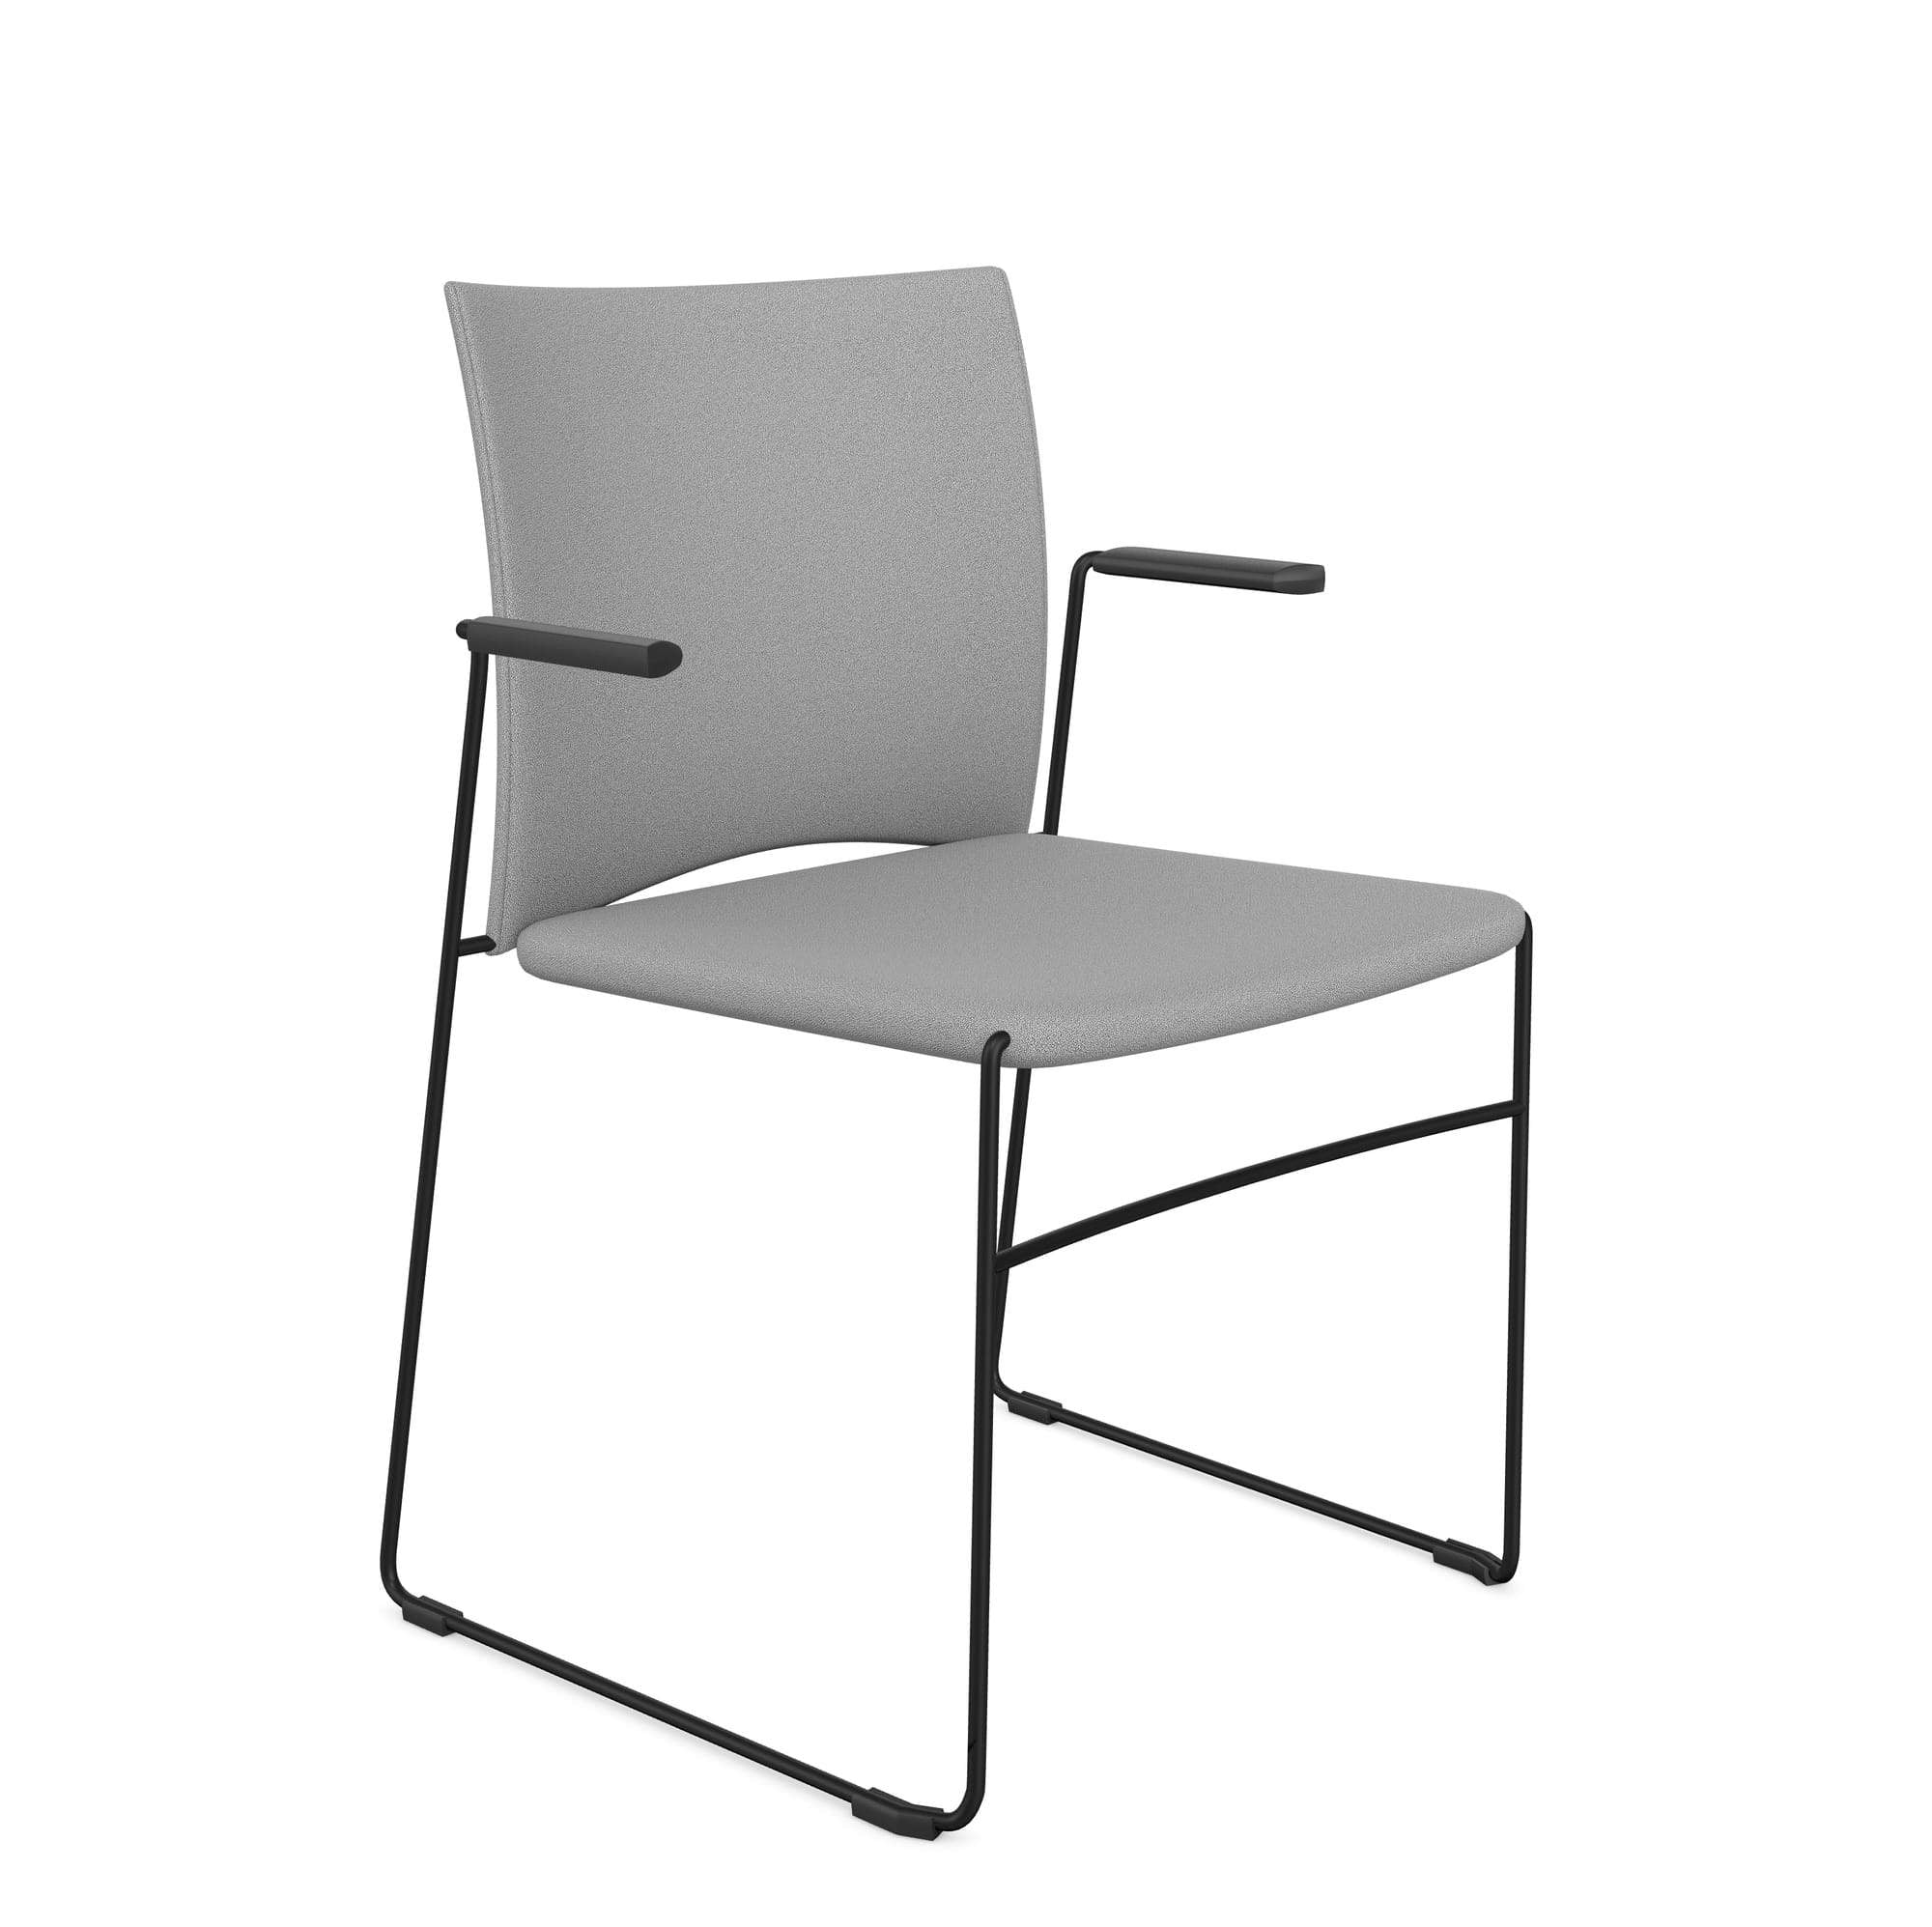 Ariz Upholstered Seat with Armrest and Backrest Chair - Model 570V